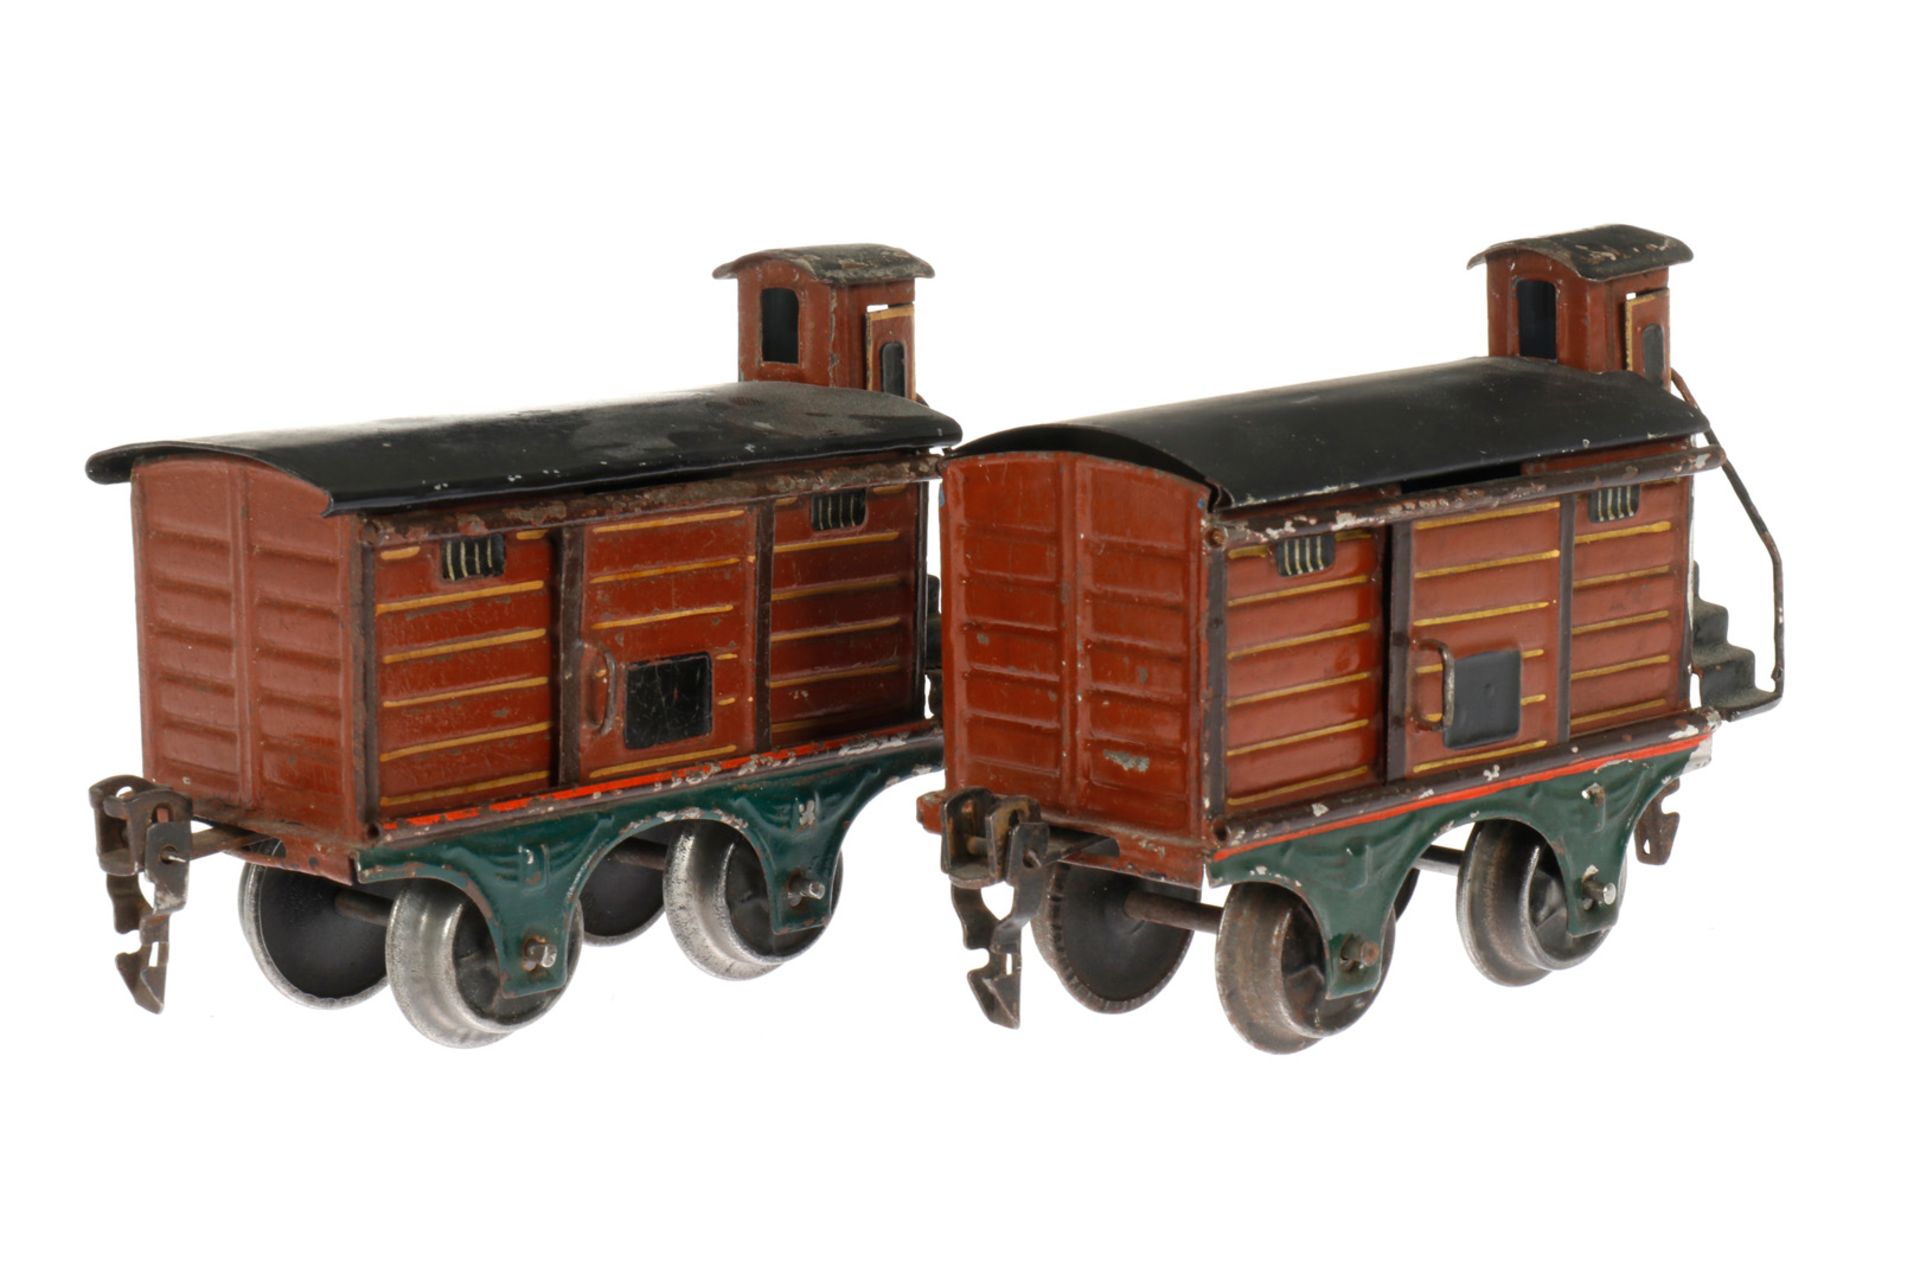 2 Märklin gedeckte Güterwagen 1804, S 0, handlackiert, 1 Dach ersetzt, Lackschäden, Alterungsspuren,